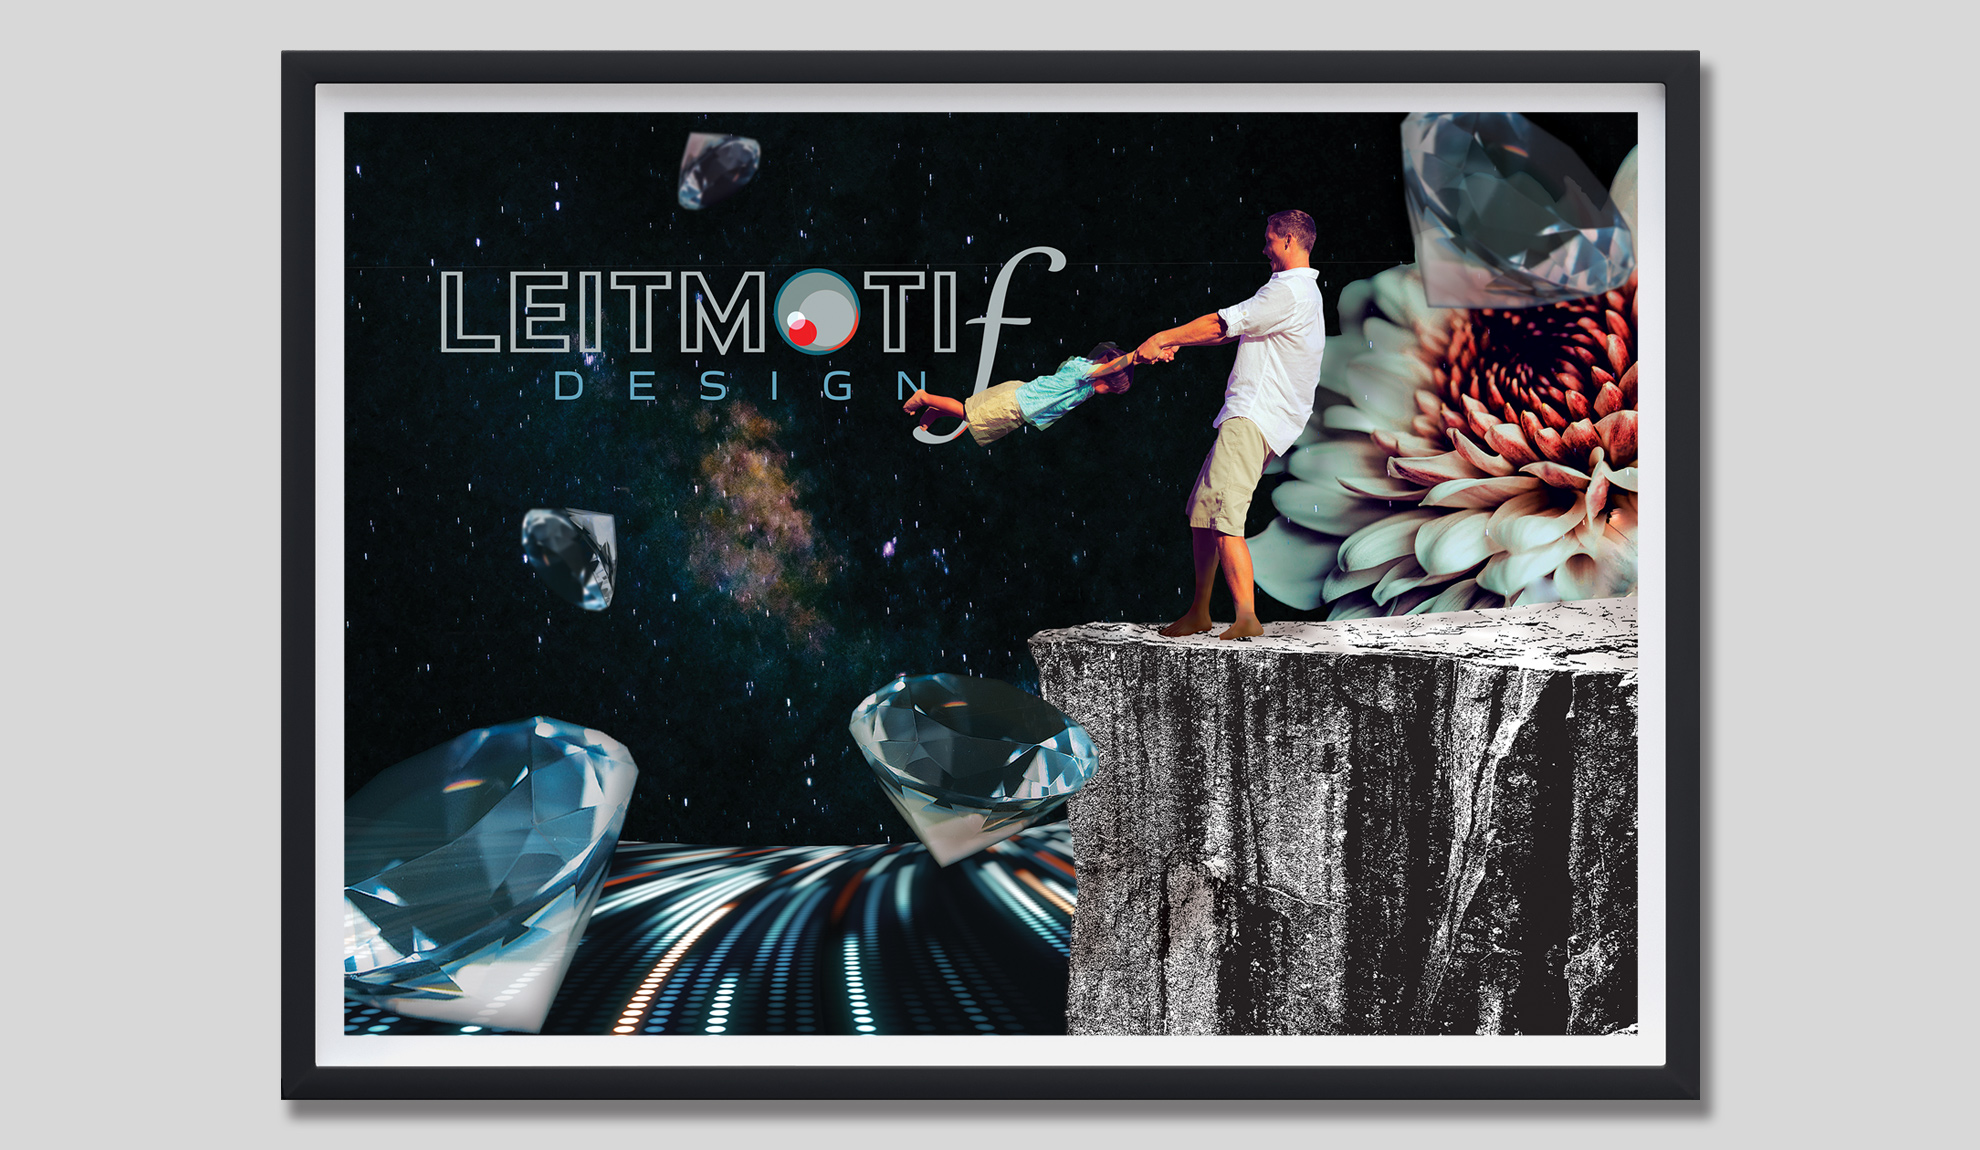 Leitmotif Design promotional poster, final version